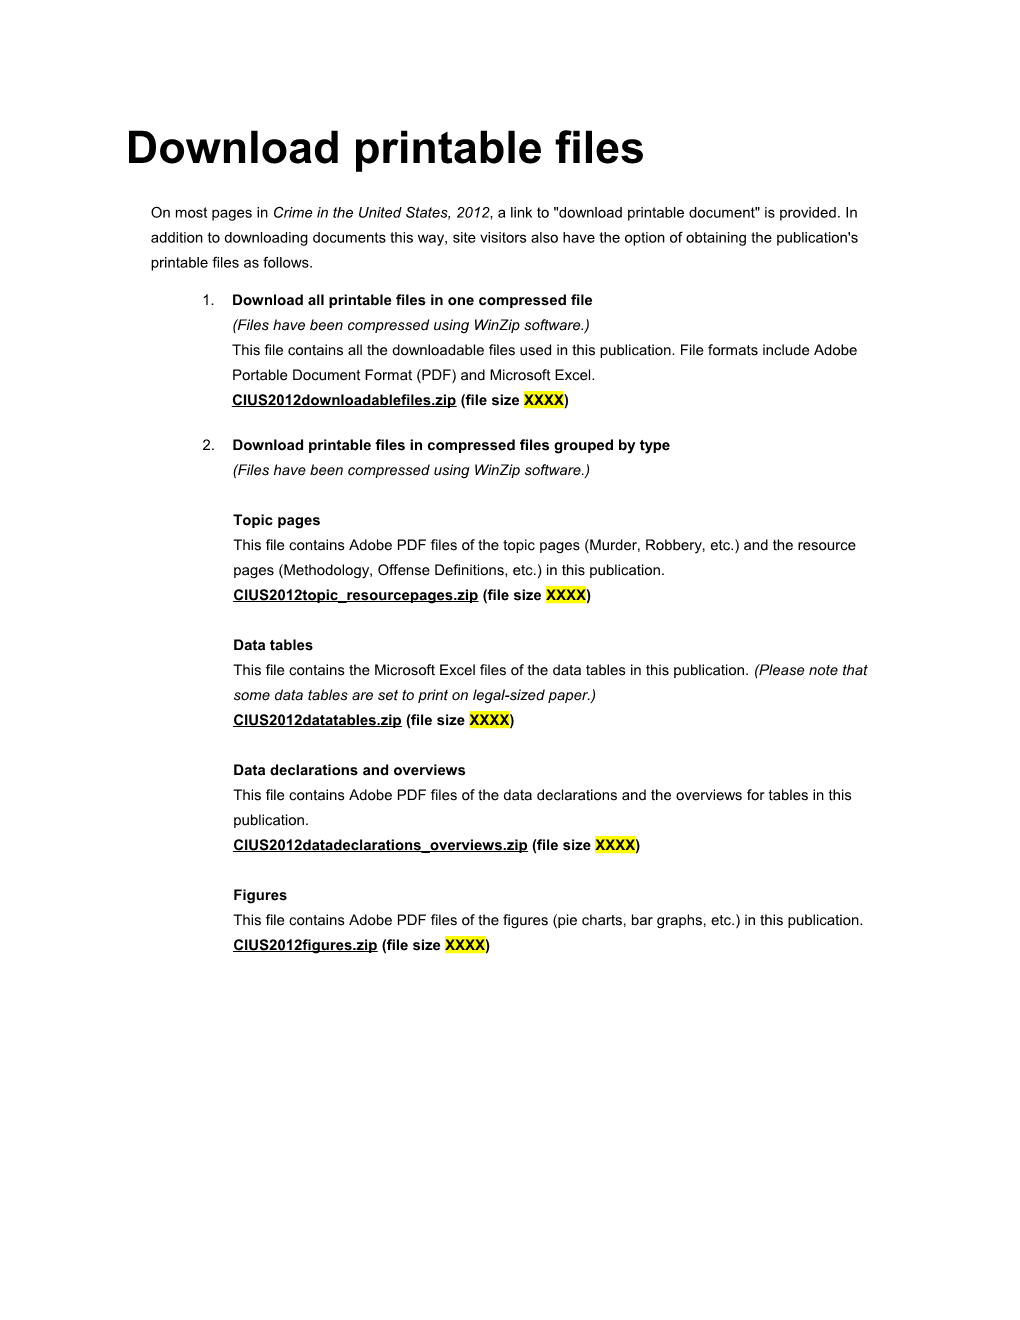 Download Printable Files